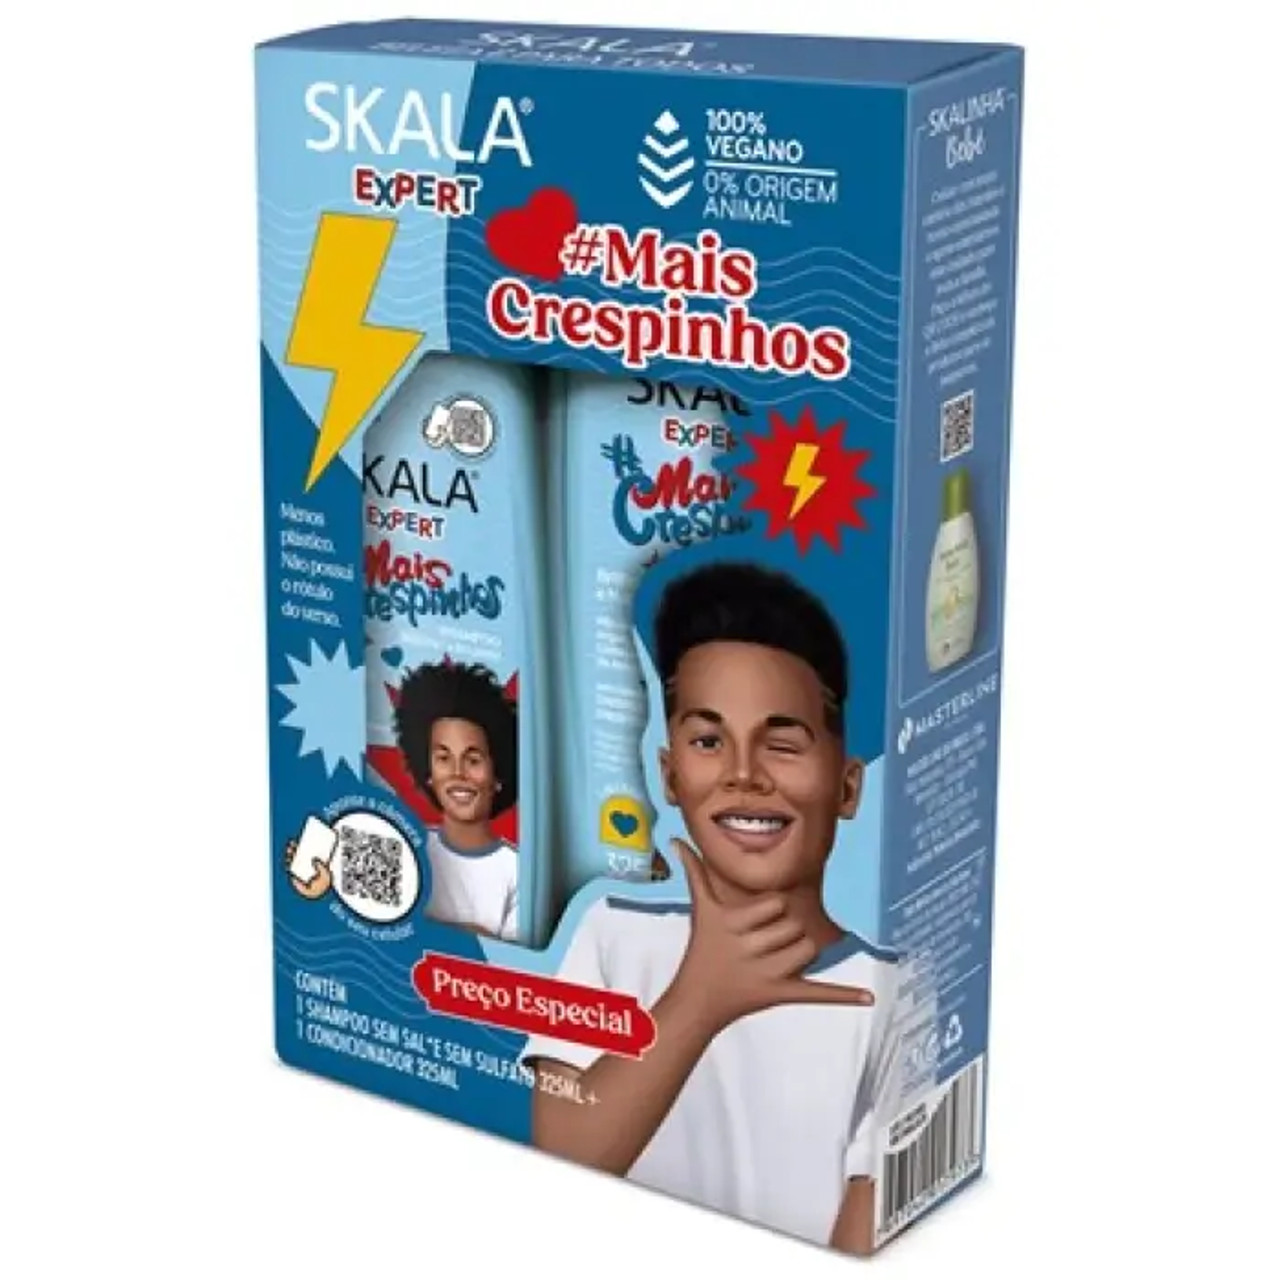 Skala Expert 'Even More Curls' Kids Sham+Cond Kit - 6 Packs (12 Units x 325ml) - Chicken Pieces